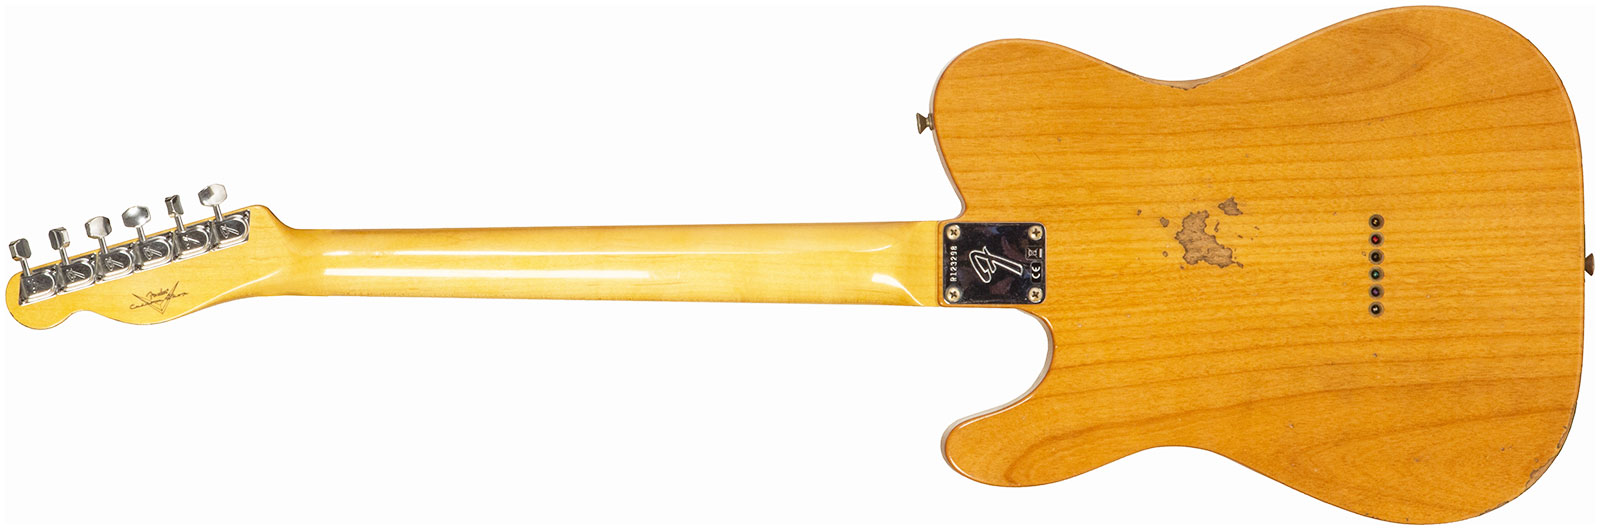 Fender Custom Shop Tele 1968 2s Ht Mn #r123298 - Relic Aged Natural - E-Gitarre in Teleform - Variation 1